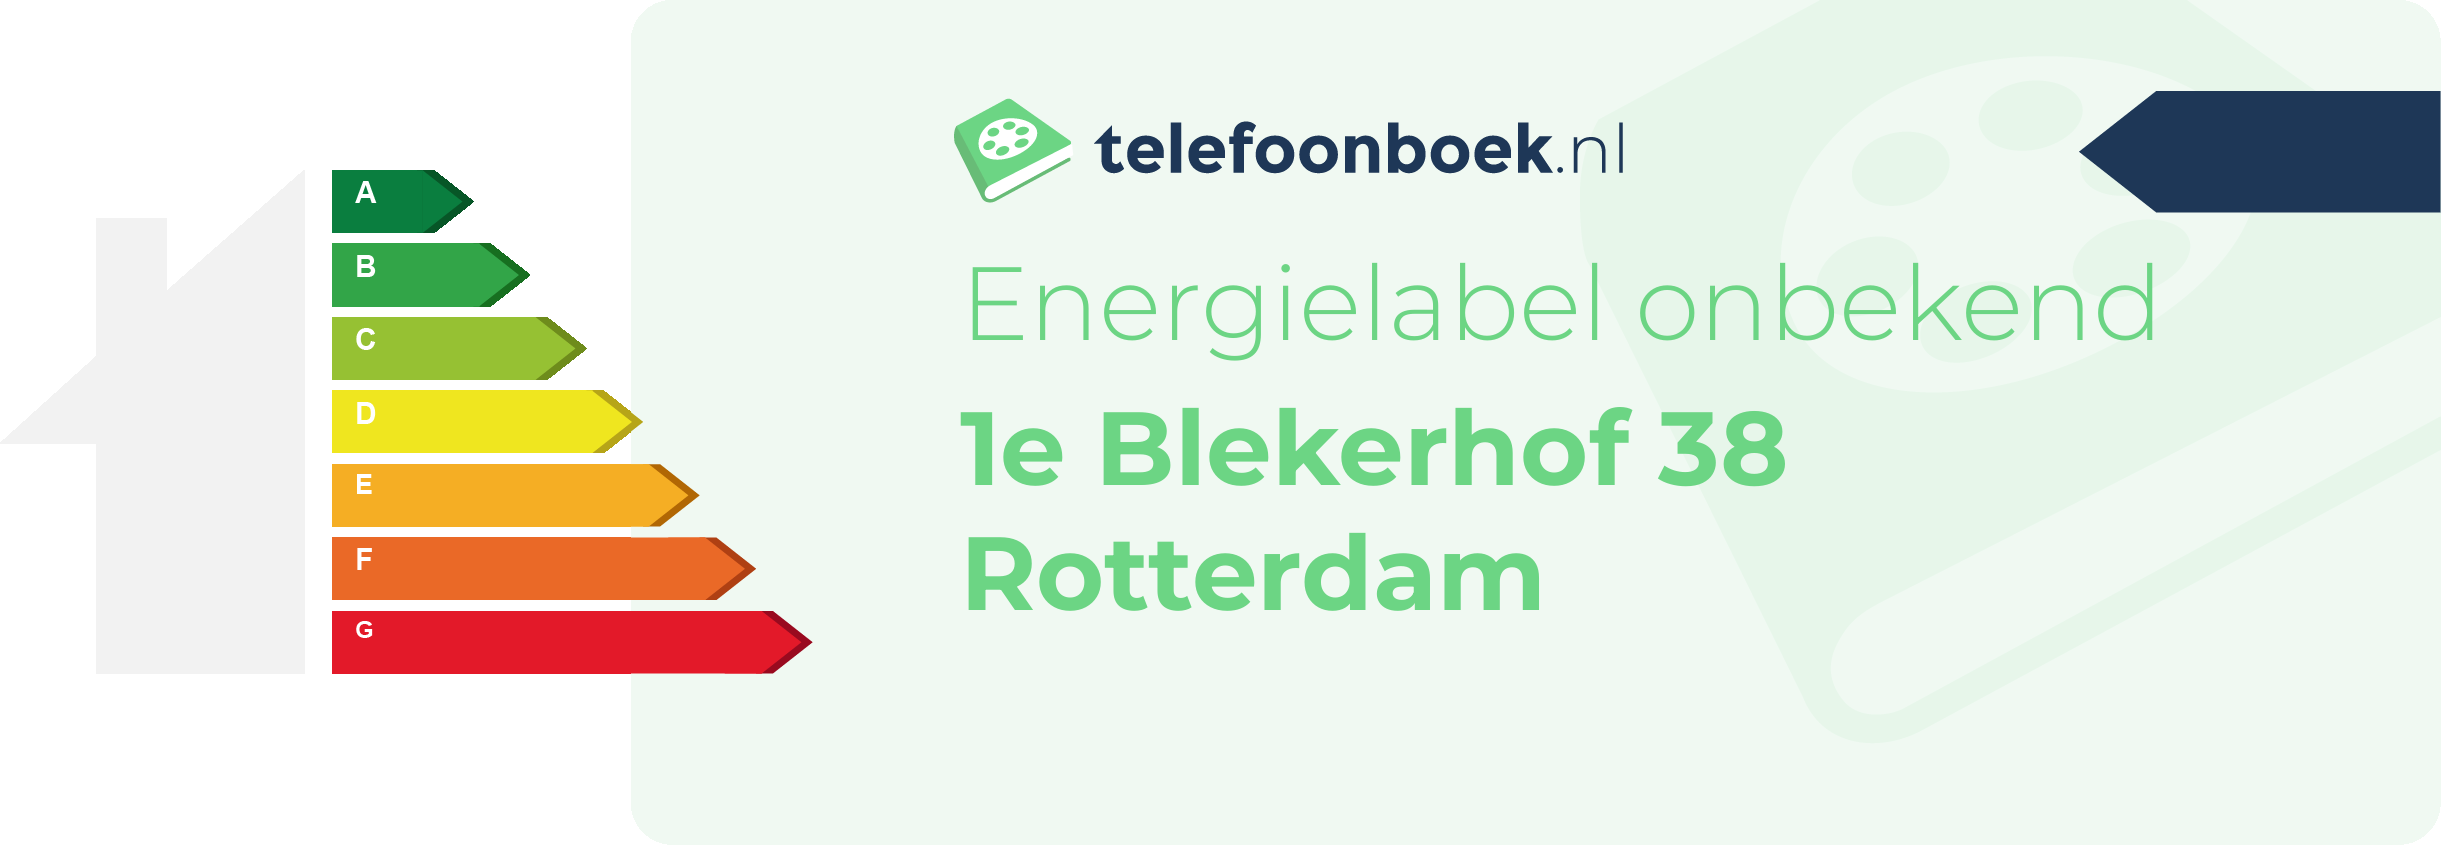 Energielabel 1e Blekerhof 38 Rotterdam